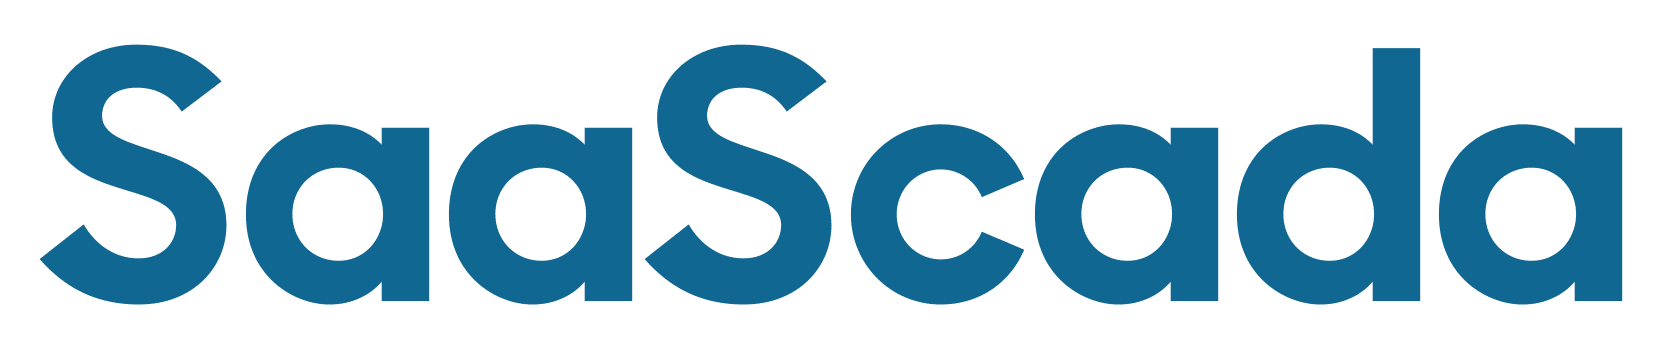 SaaScada-logo-close-crop-dark-teal-RGB